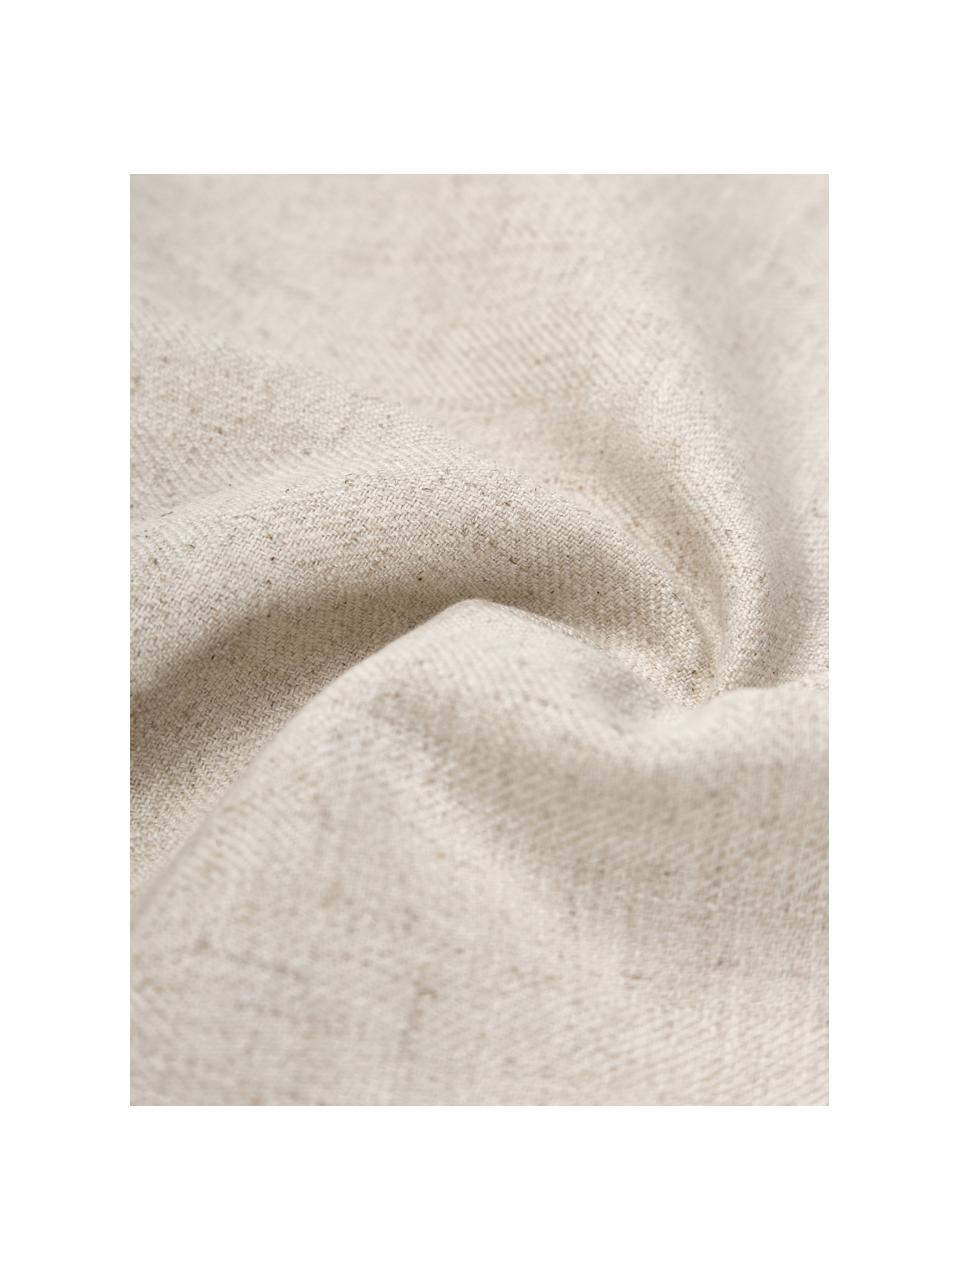 Kussenhoes Camille in beige met franjes, 60% polyester, 25% katoen, 15% linnen, Beige, B 45 x L 45 cm